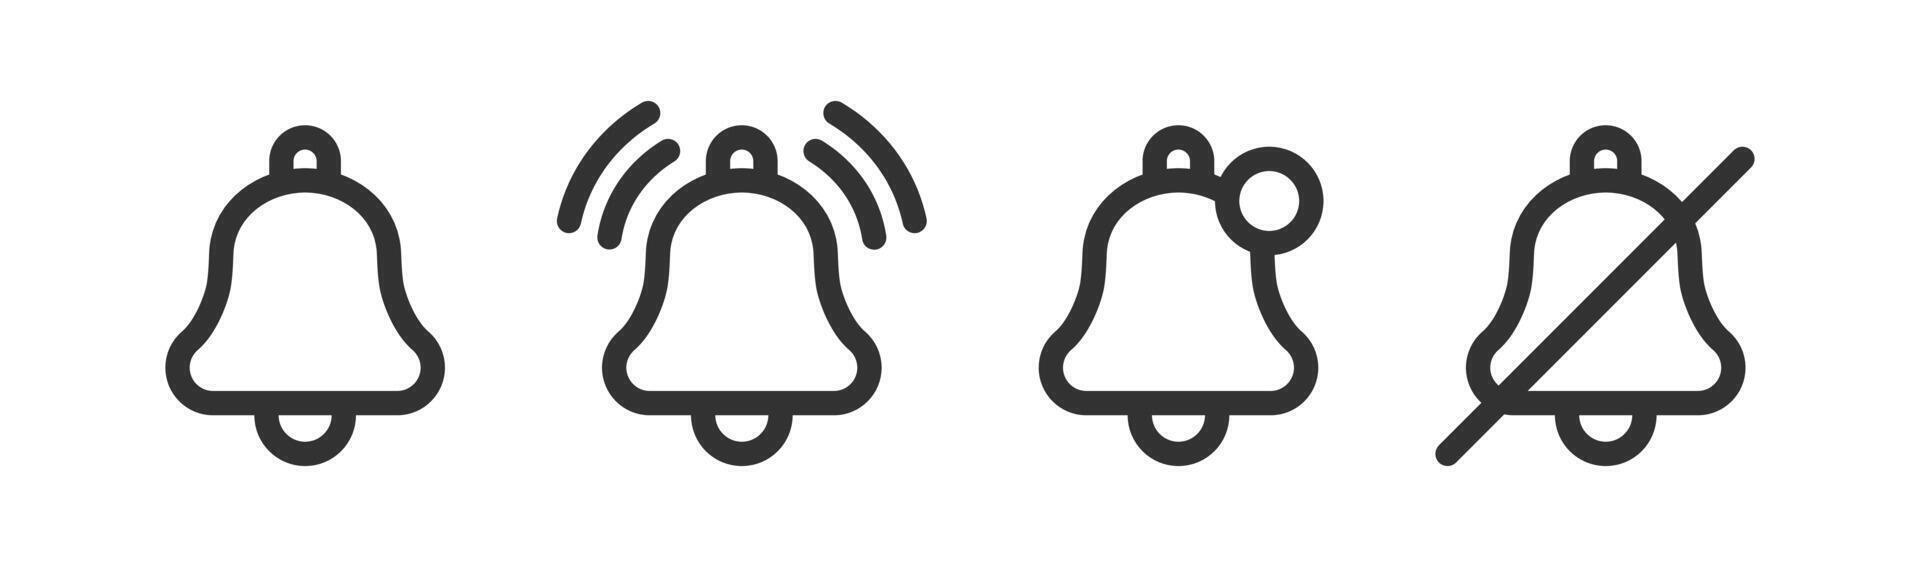 Notification bell icon. Alarm alert sign. Sound reminder. New message. Doorbell call. Sound mute. vector